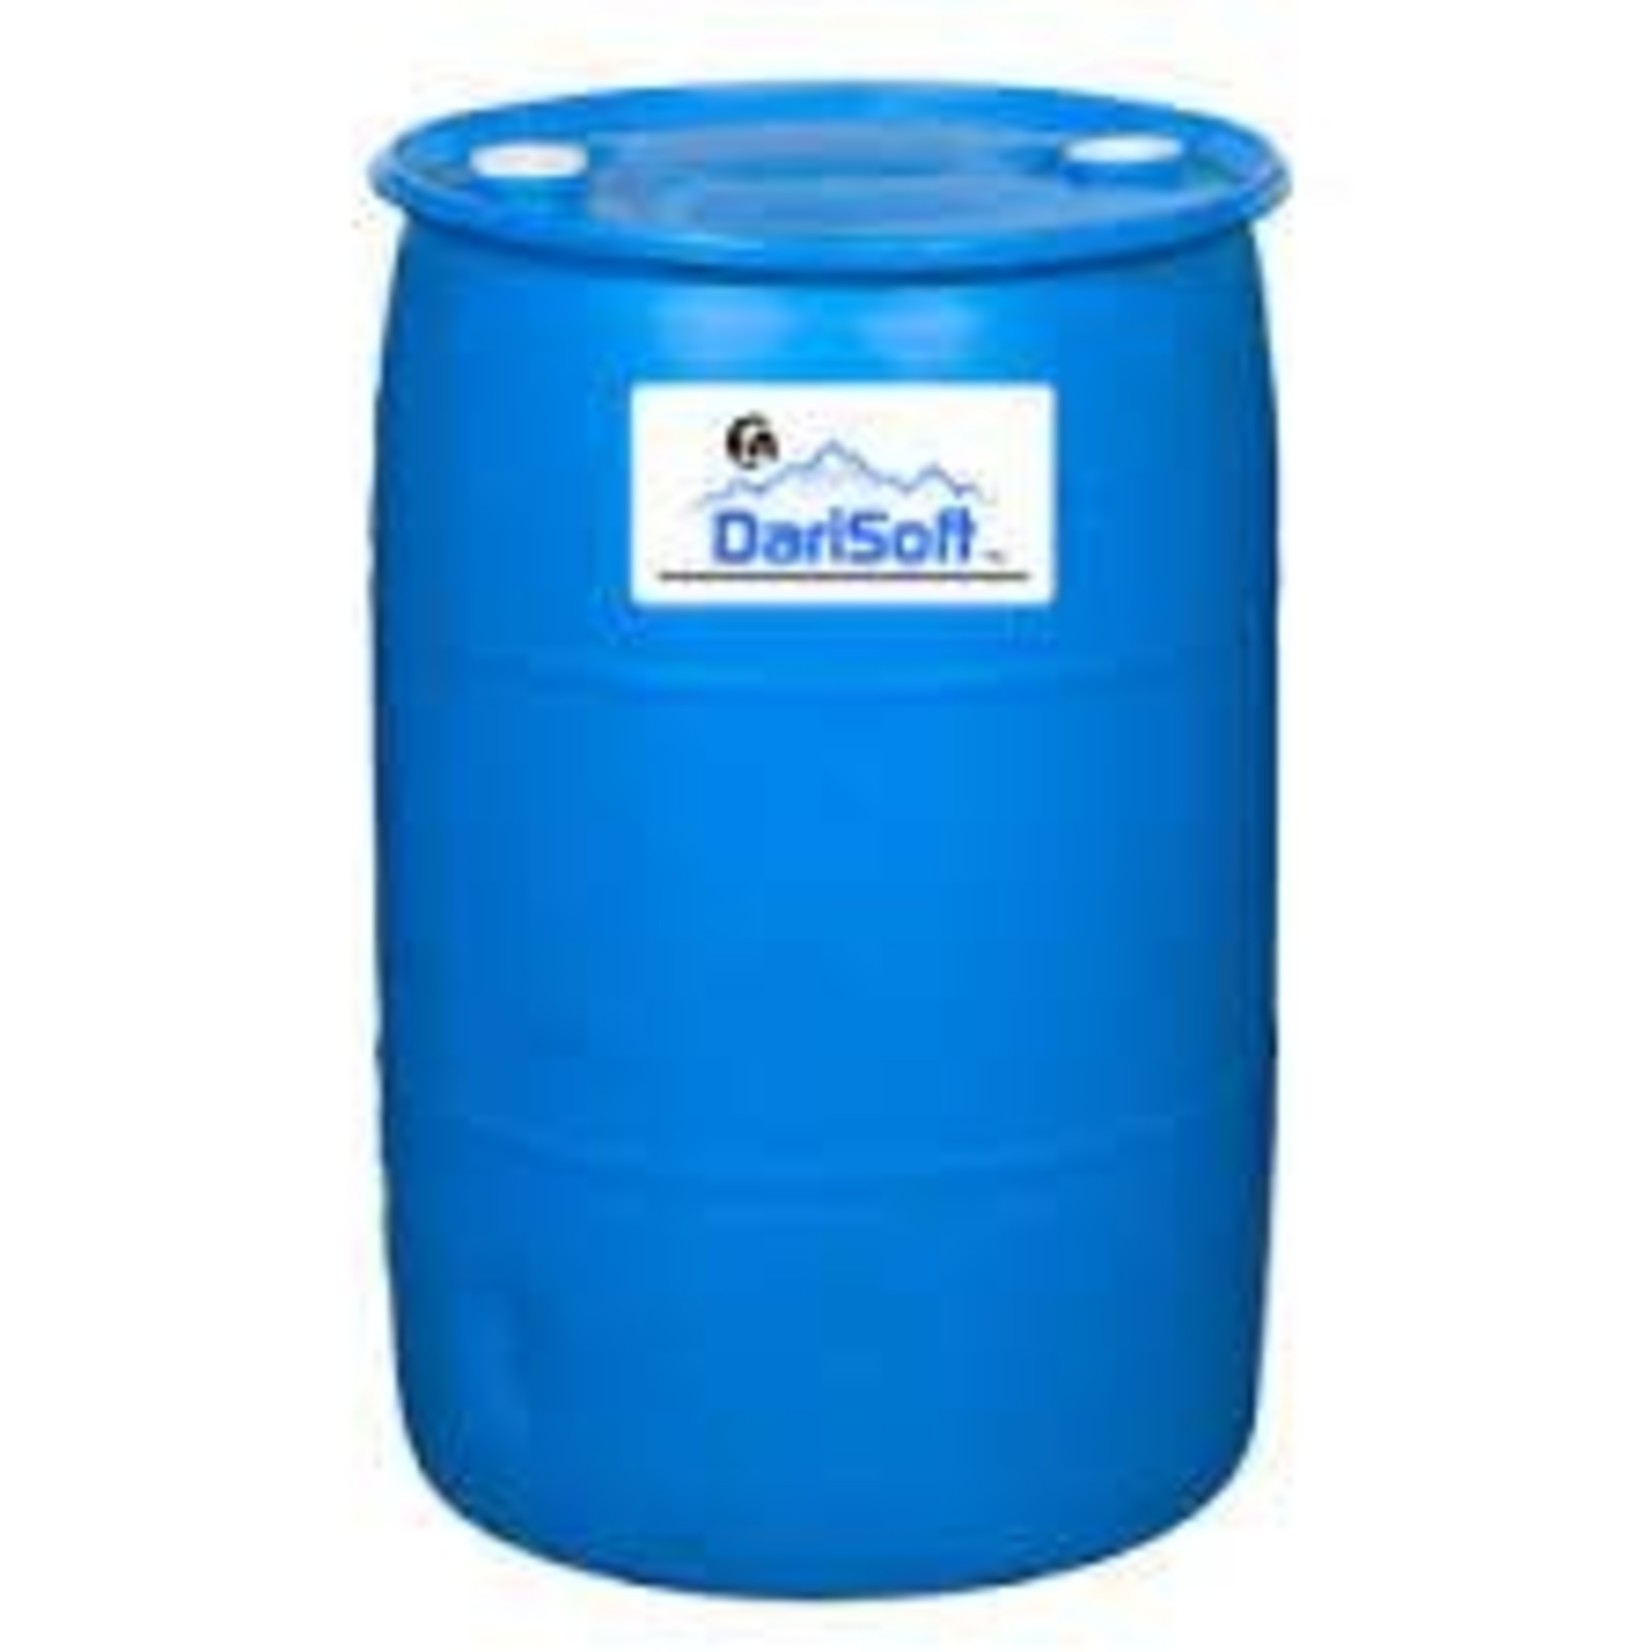 Darisoft 3.5% iodine B/F with 6% phosphoric acid.